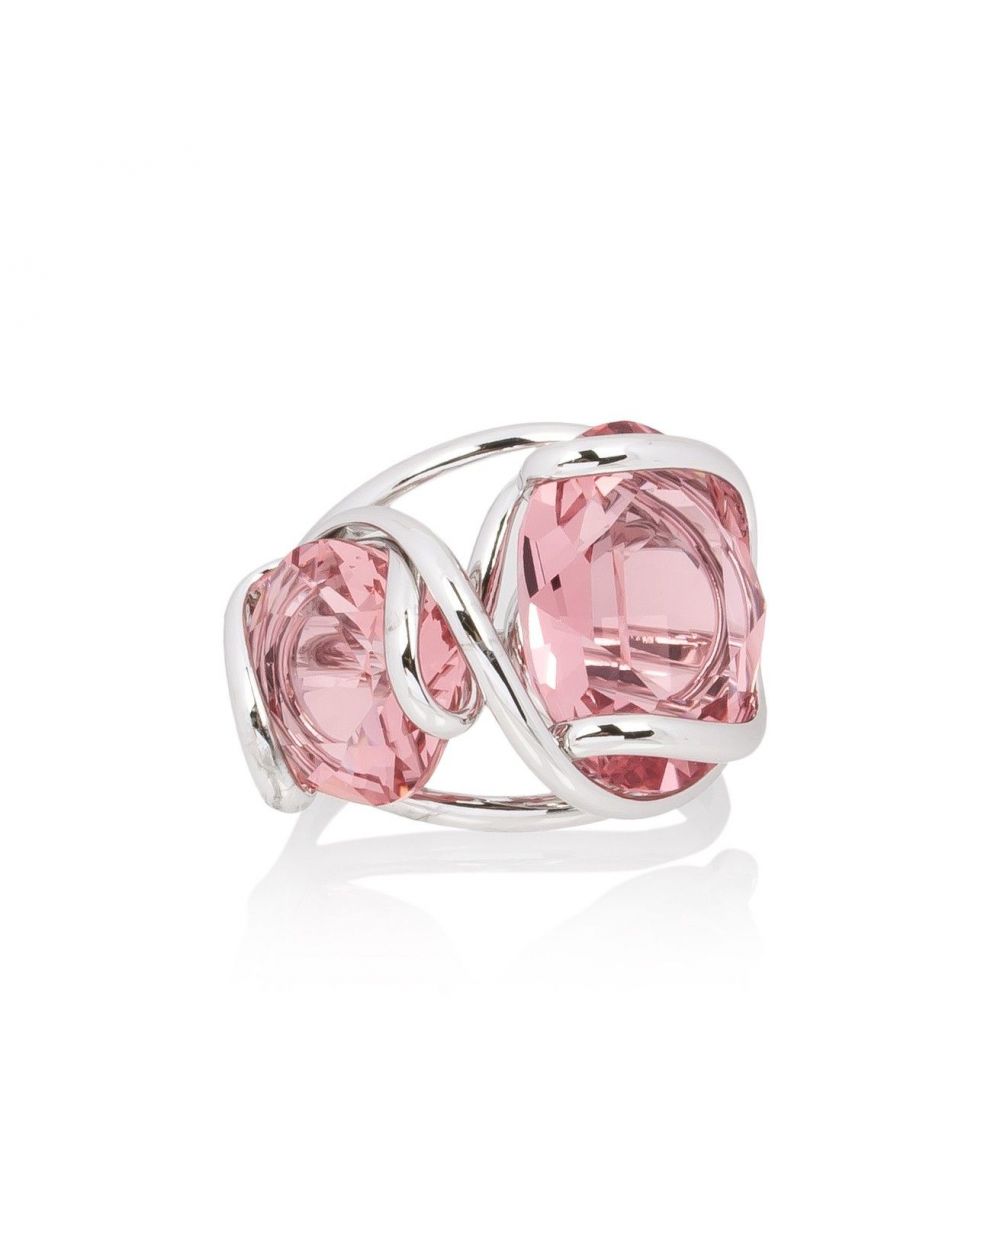 Andrea Marazzini bijoux - Bague cristal Swarovski Ovale Rose Peach Mini Double